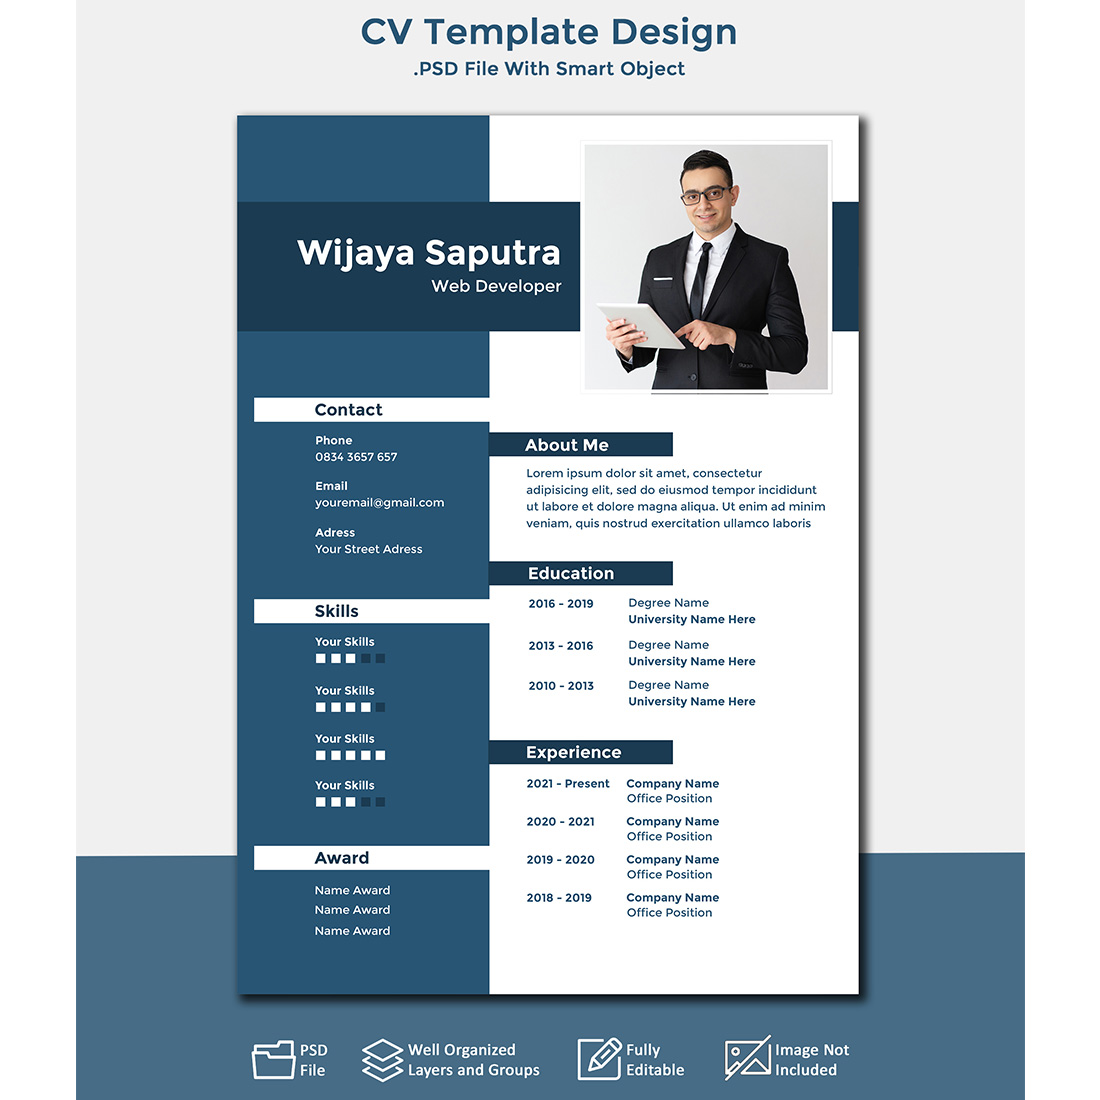 Designer Resume Templates preview image.